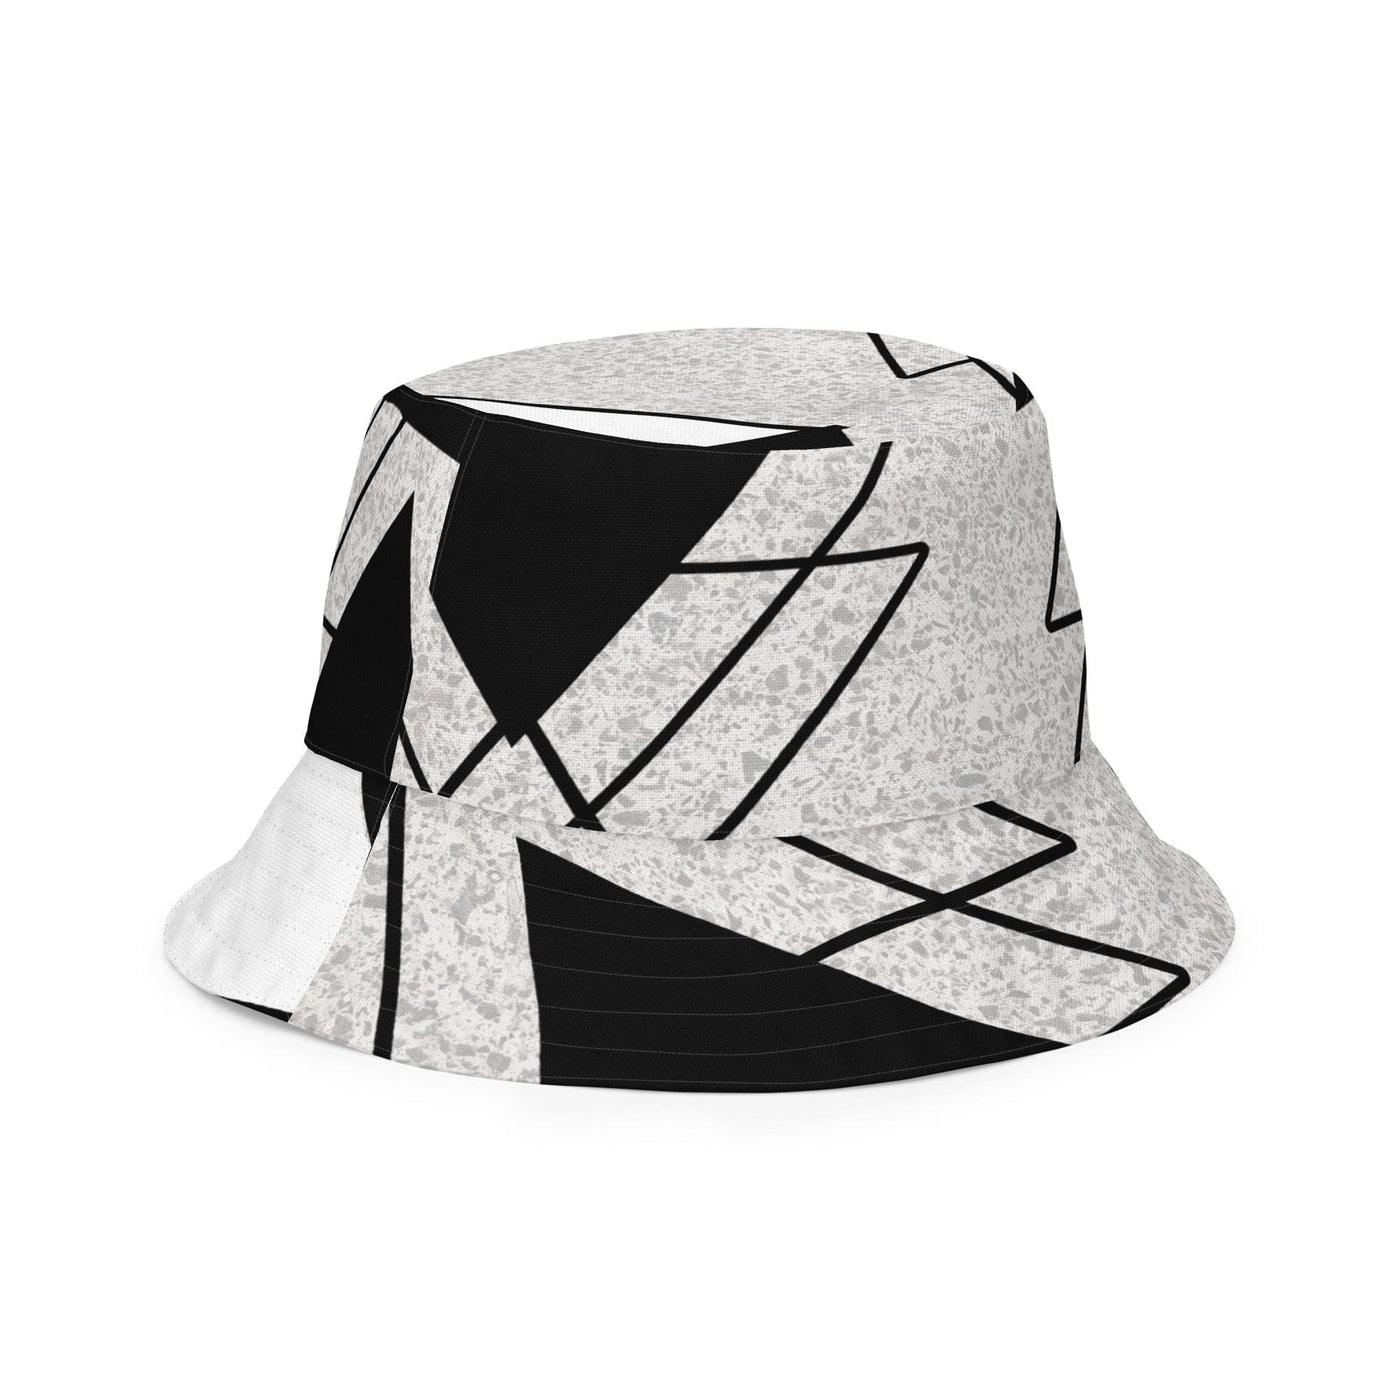 Reversible Bucket Hat Black And White Ash Grey Triangular Colorblock - Unisex